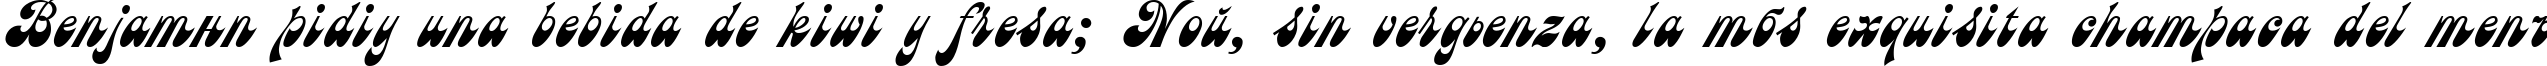 Пример написания шрифтом Astron Cyrillic текста на испанском